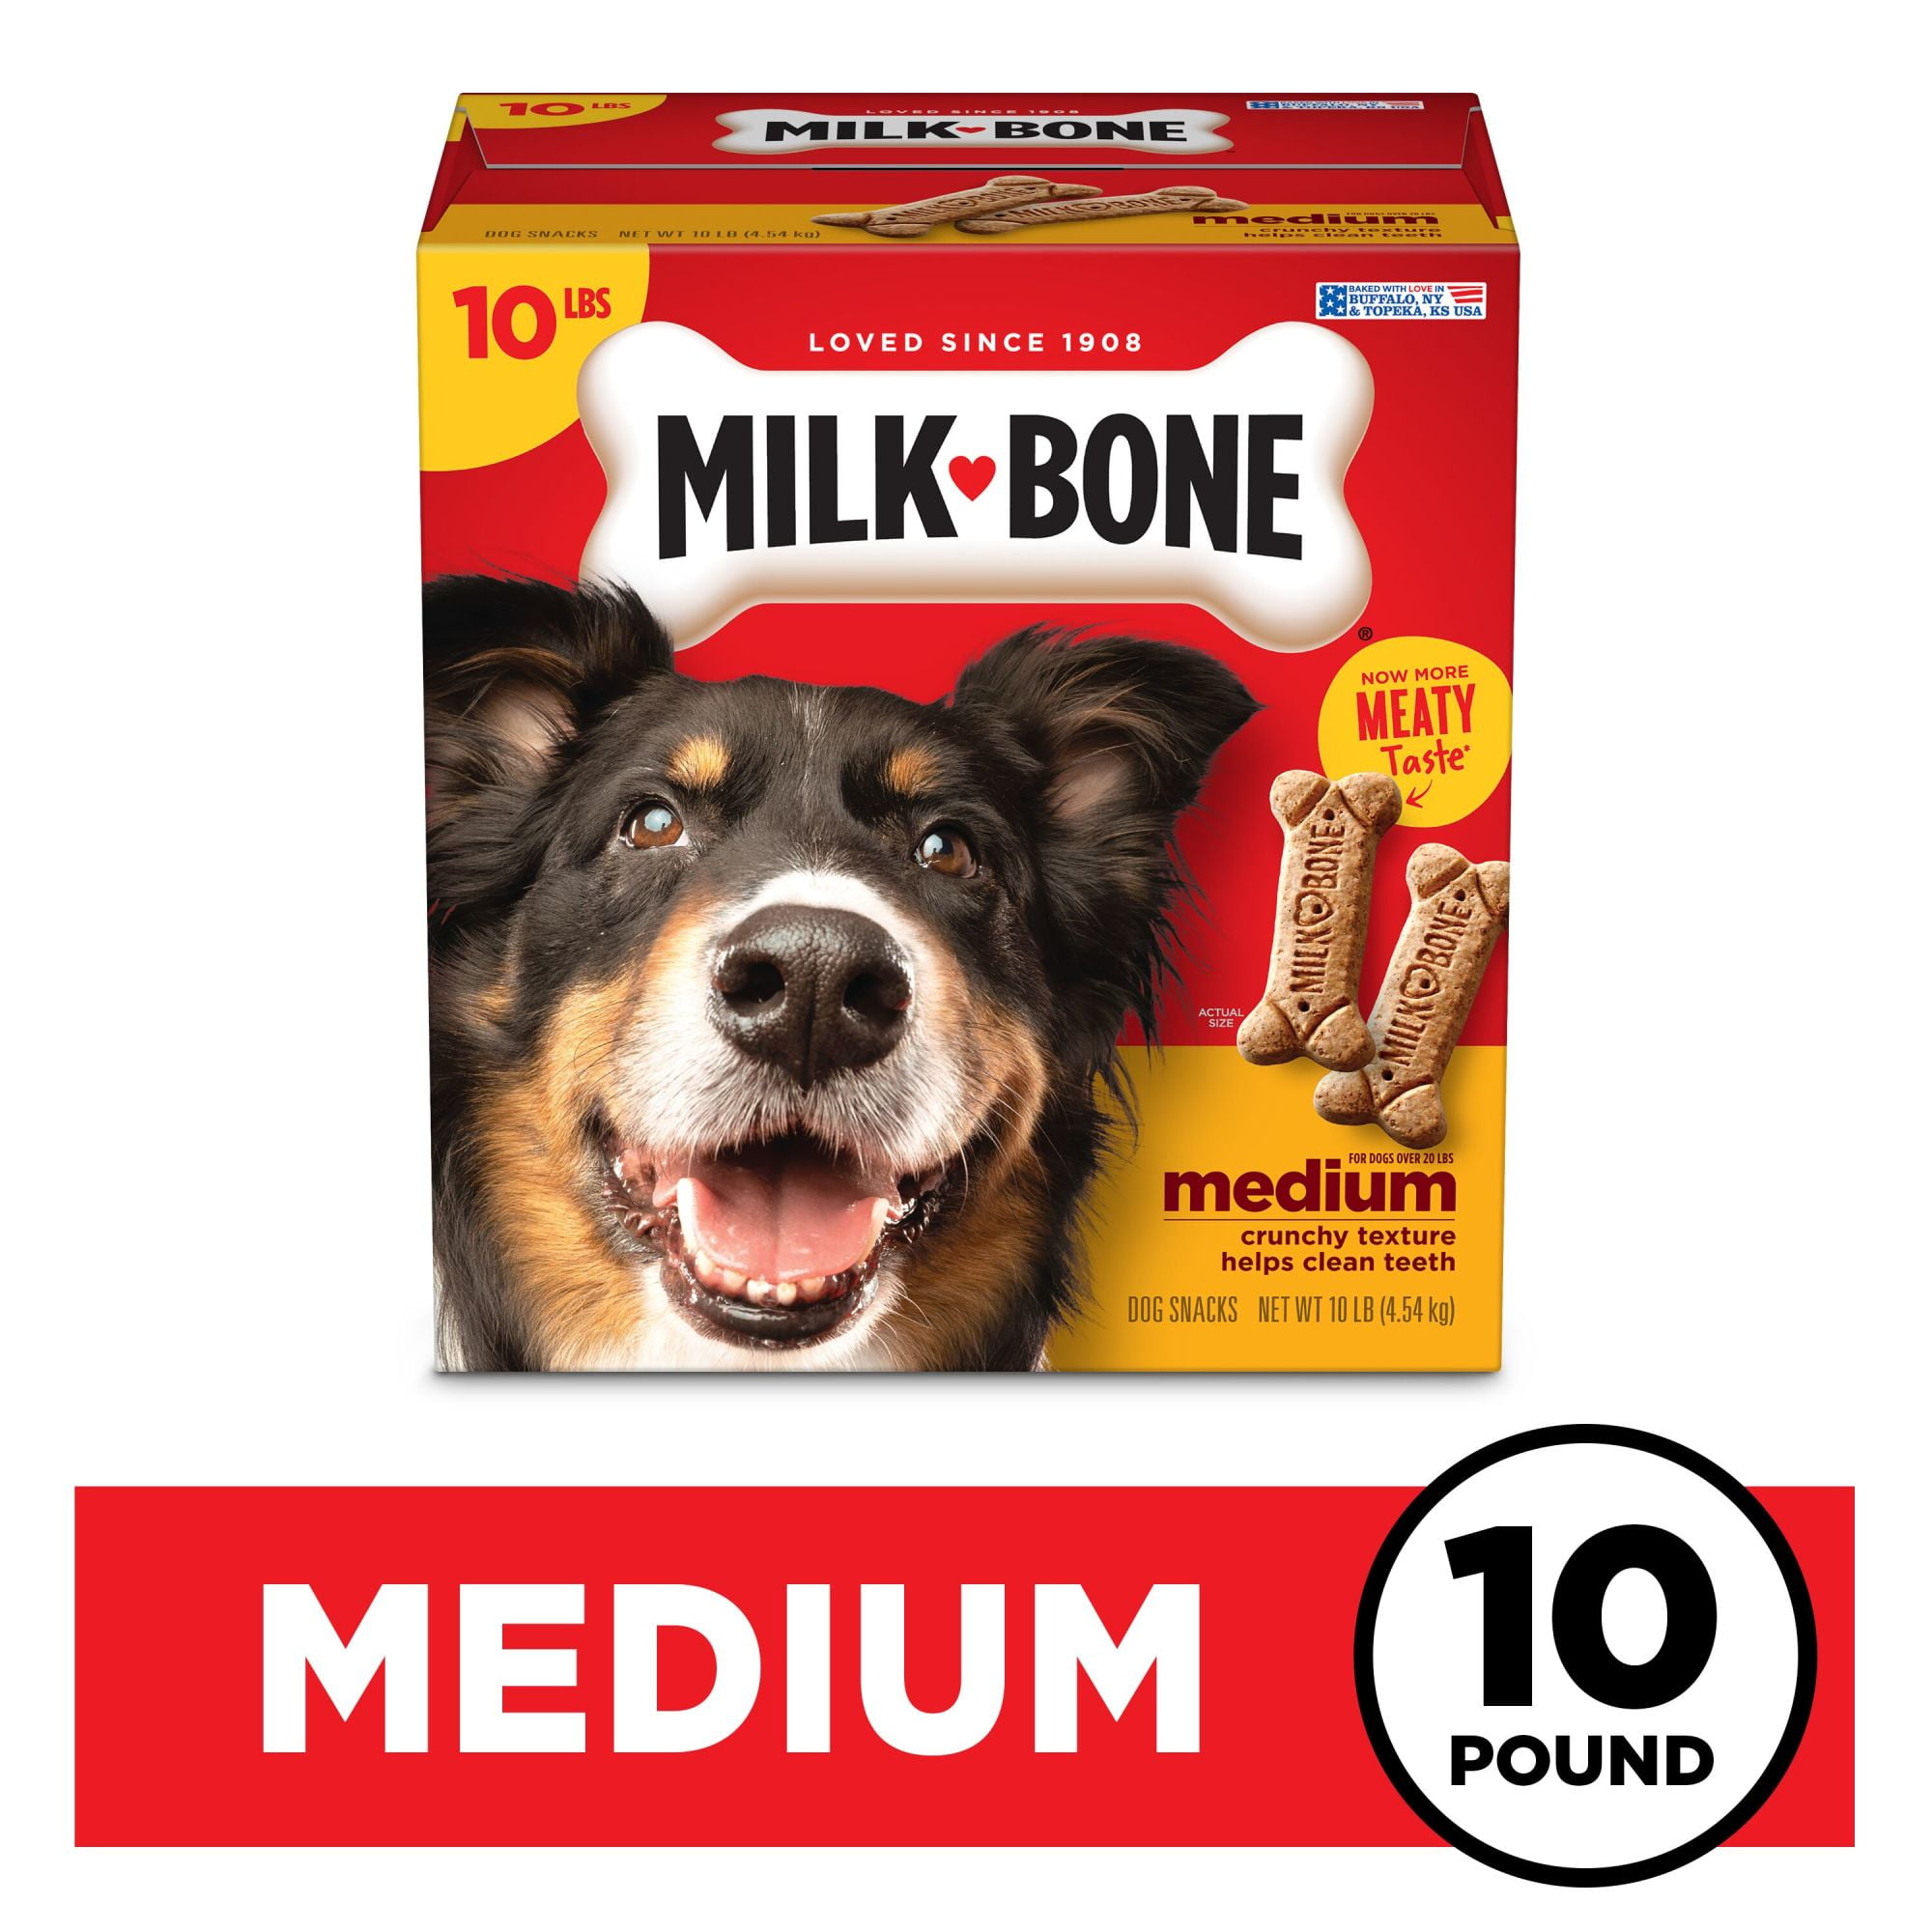 Milk-Bone Original Dog Biscuits, Medium Crunchy Dog Treats, 10 lbs. -  